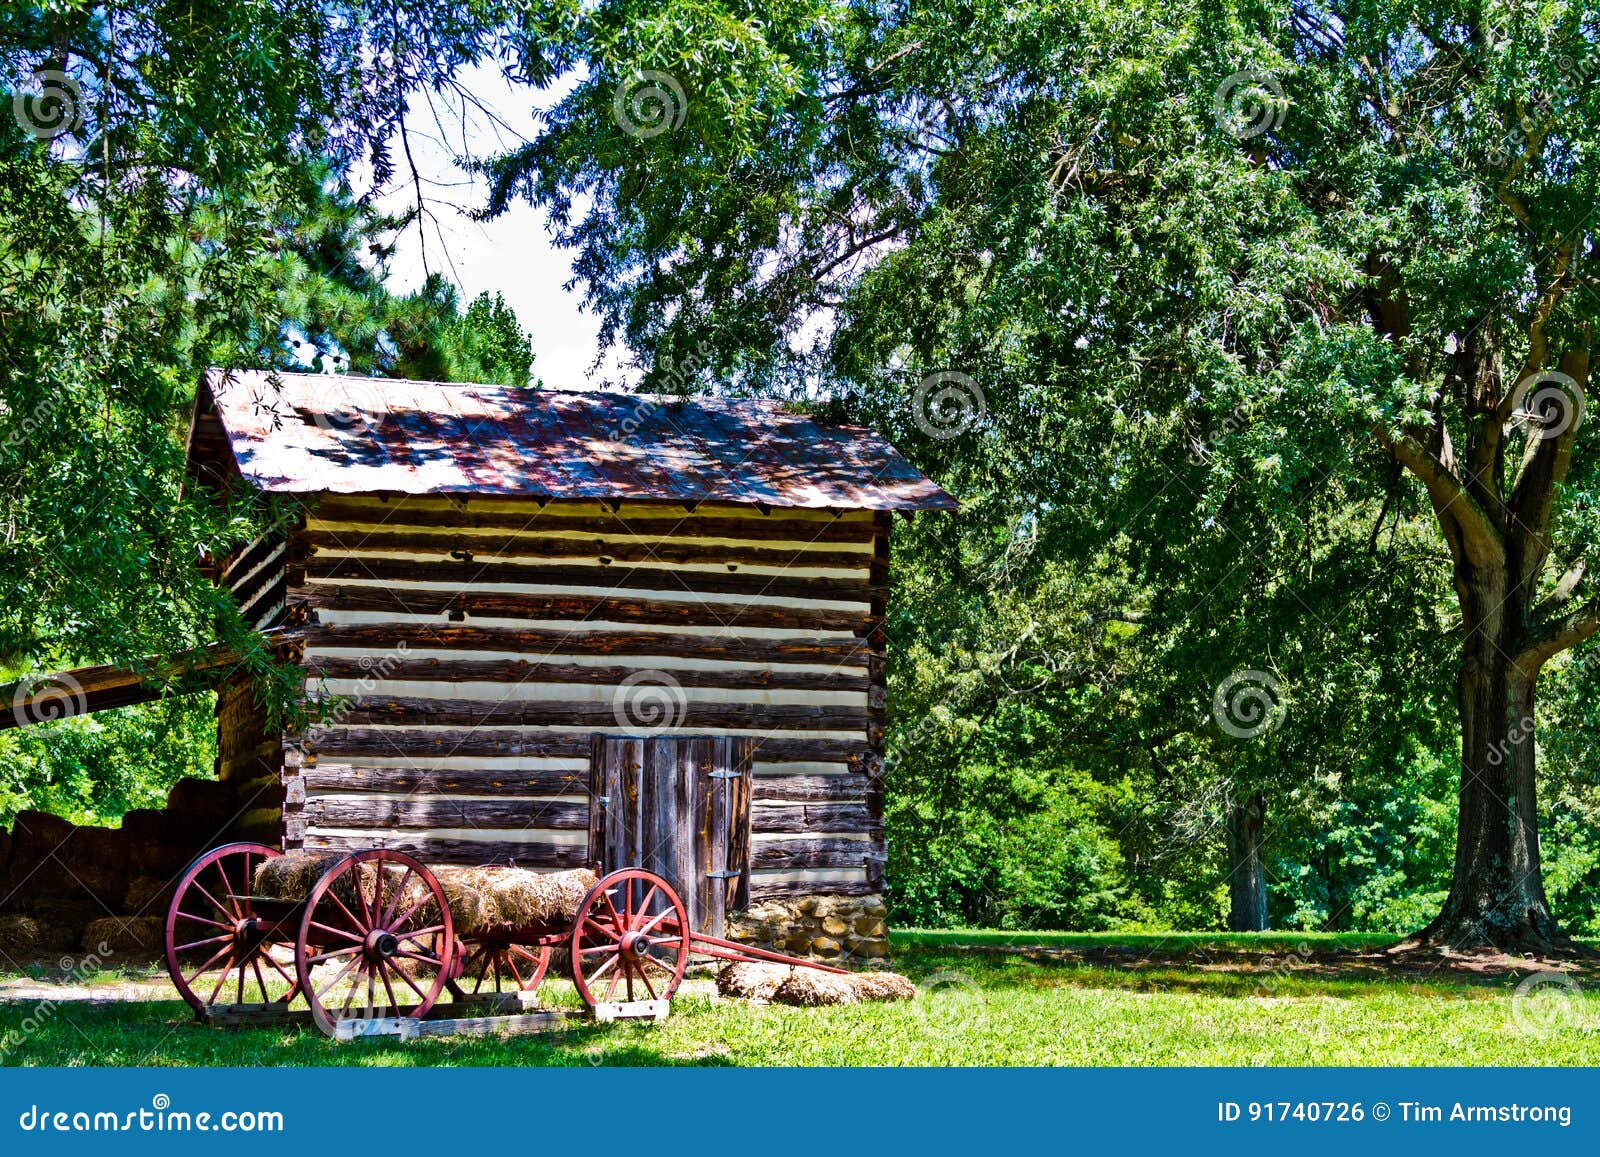 log cabin with wagon in hagan-stone park